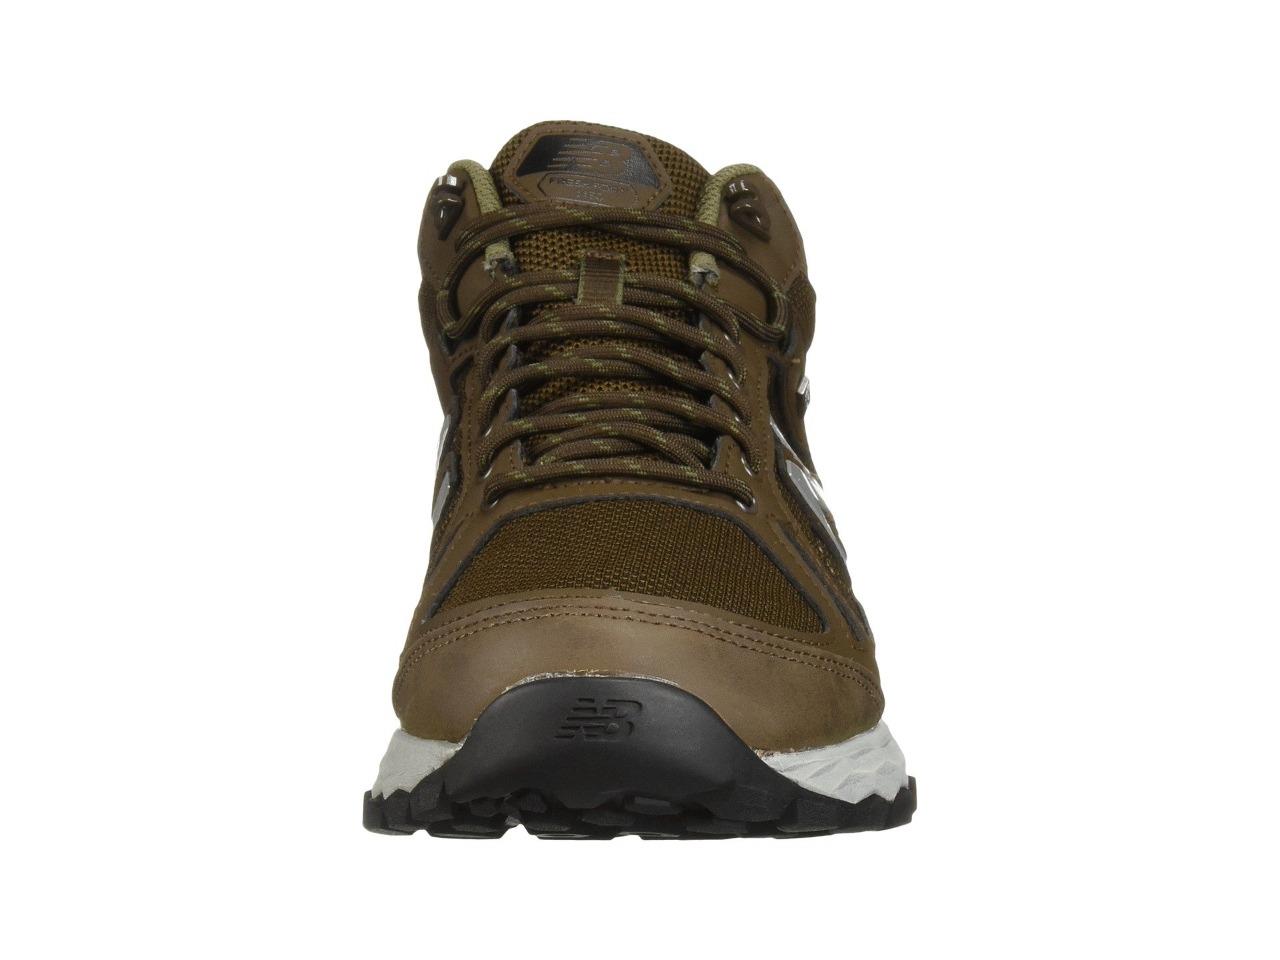 New Men's New Balance 1450 Waterproof Trail Walking Shoes MW1450WN Size ...